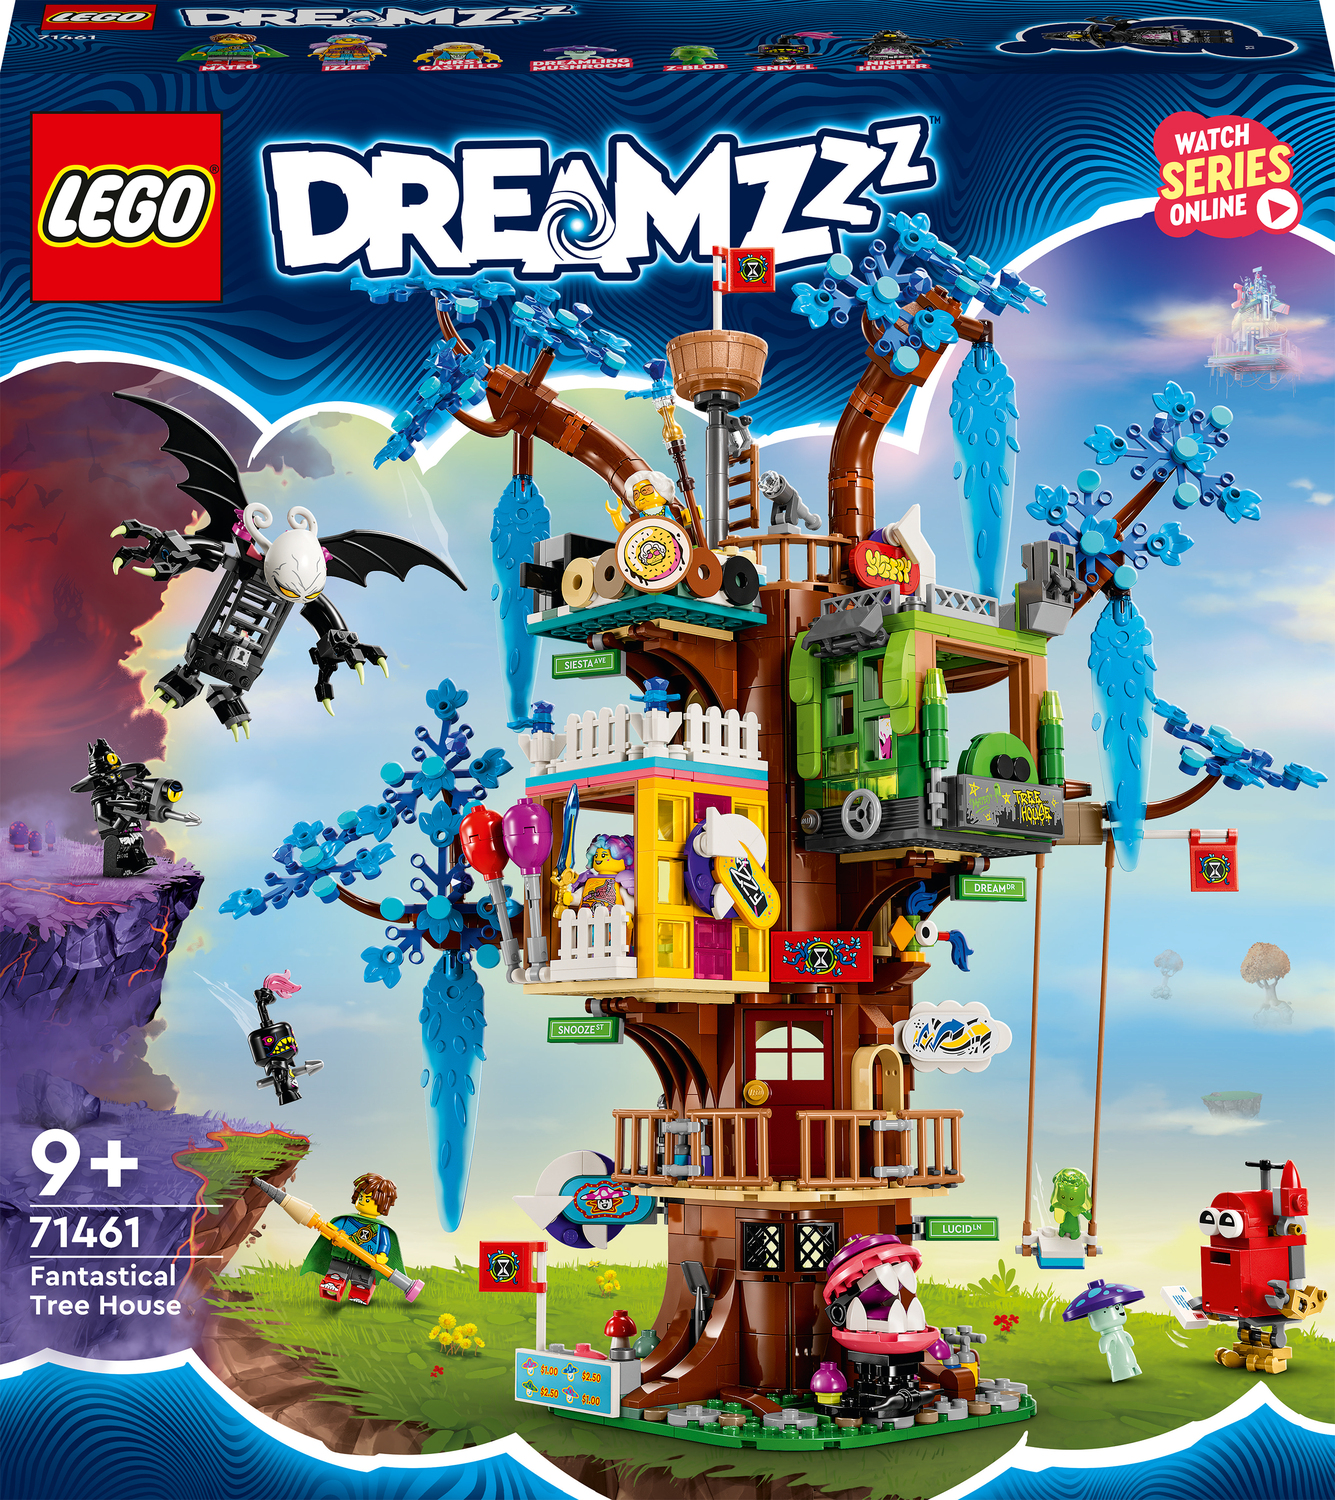 LEGO DREAMZzz Fantastical Tree House Toy Set